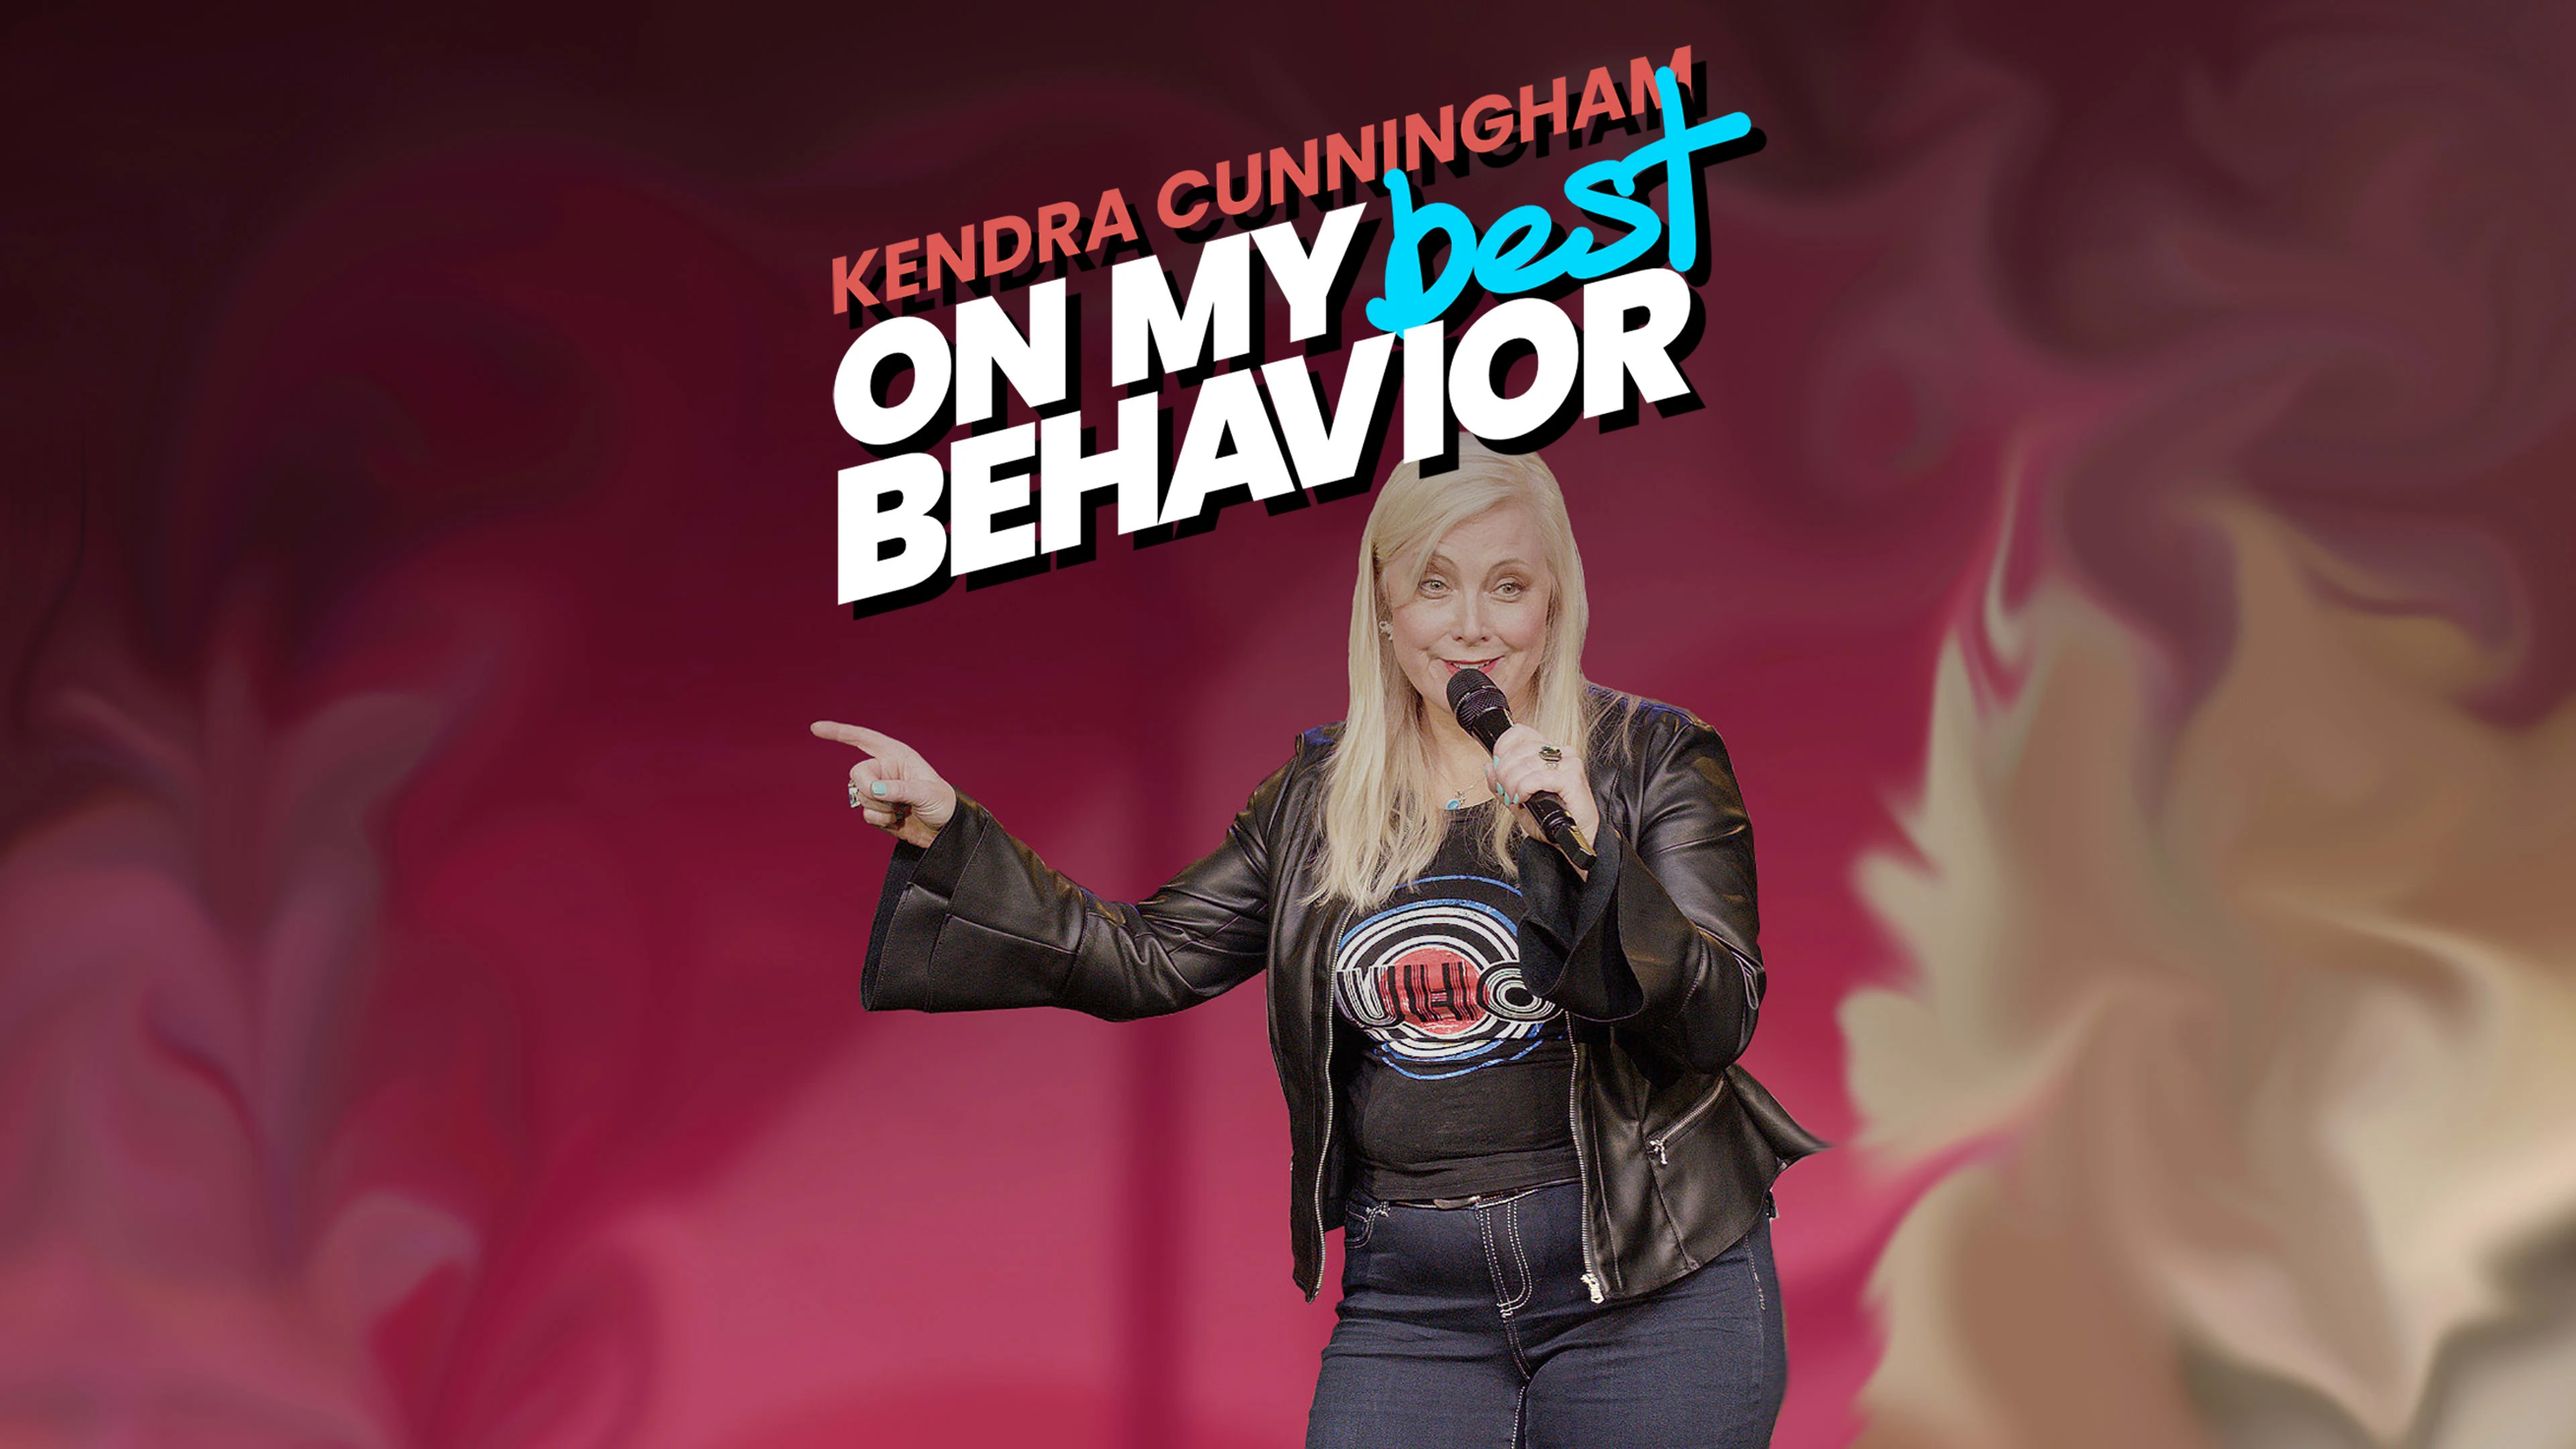 Kendra Cunningham - On My Best Behavior